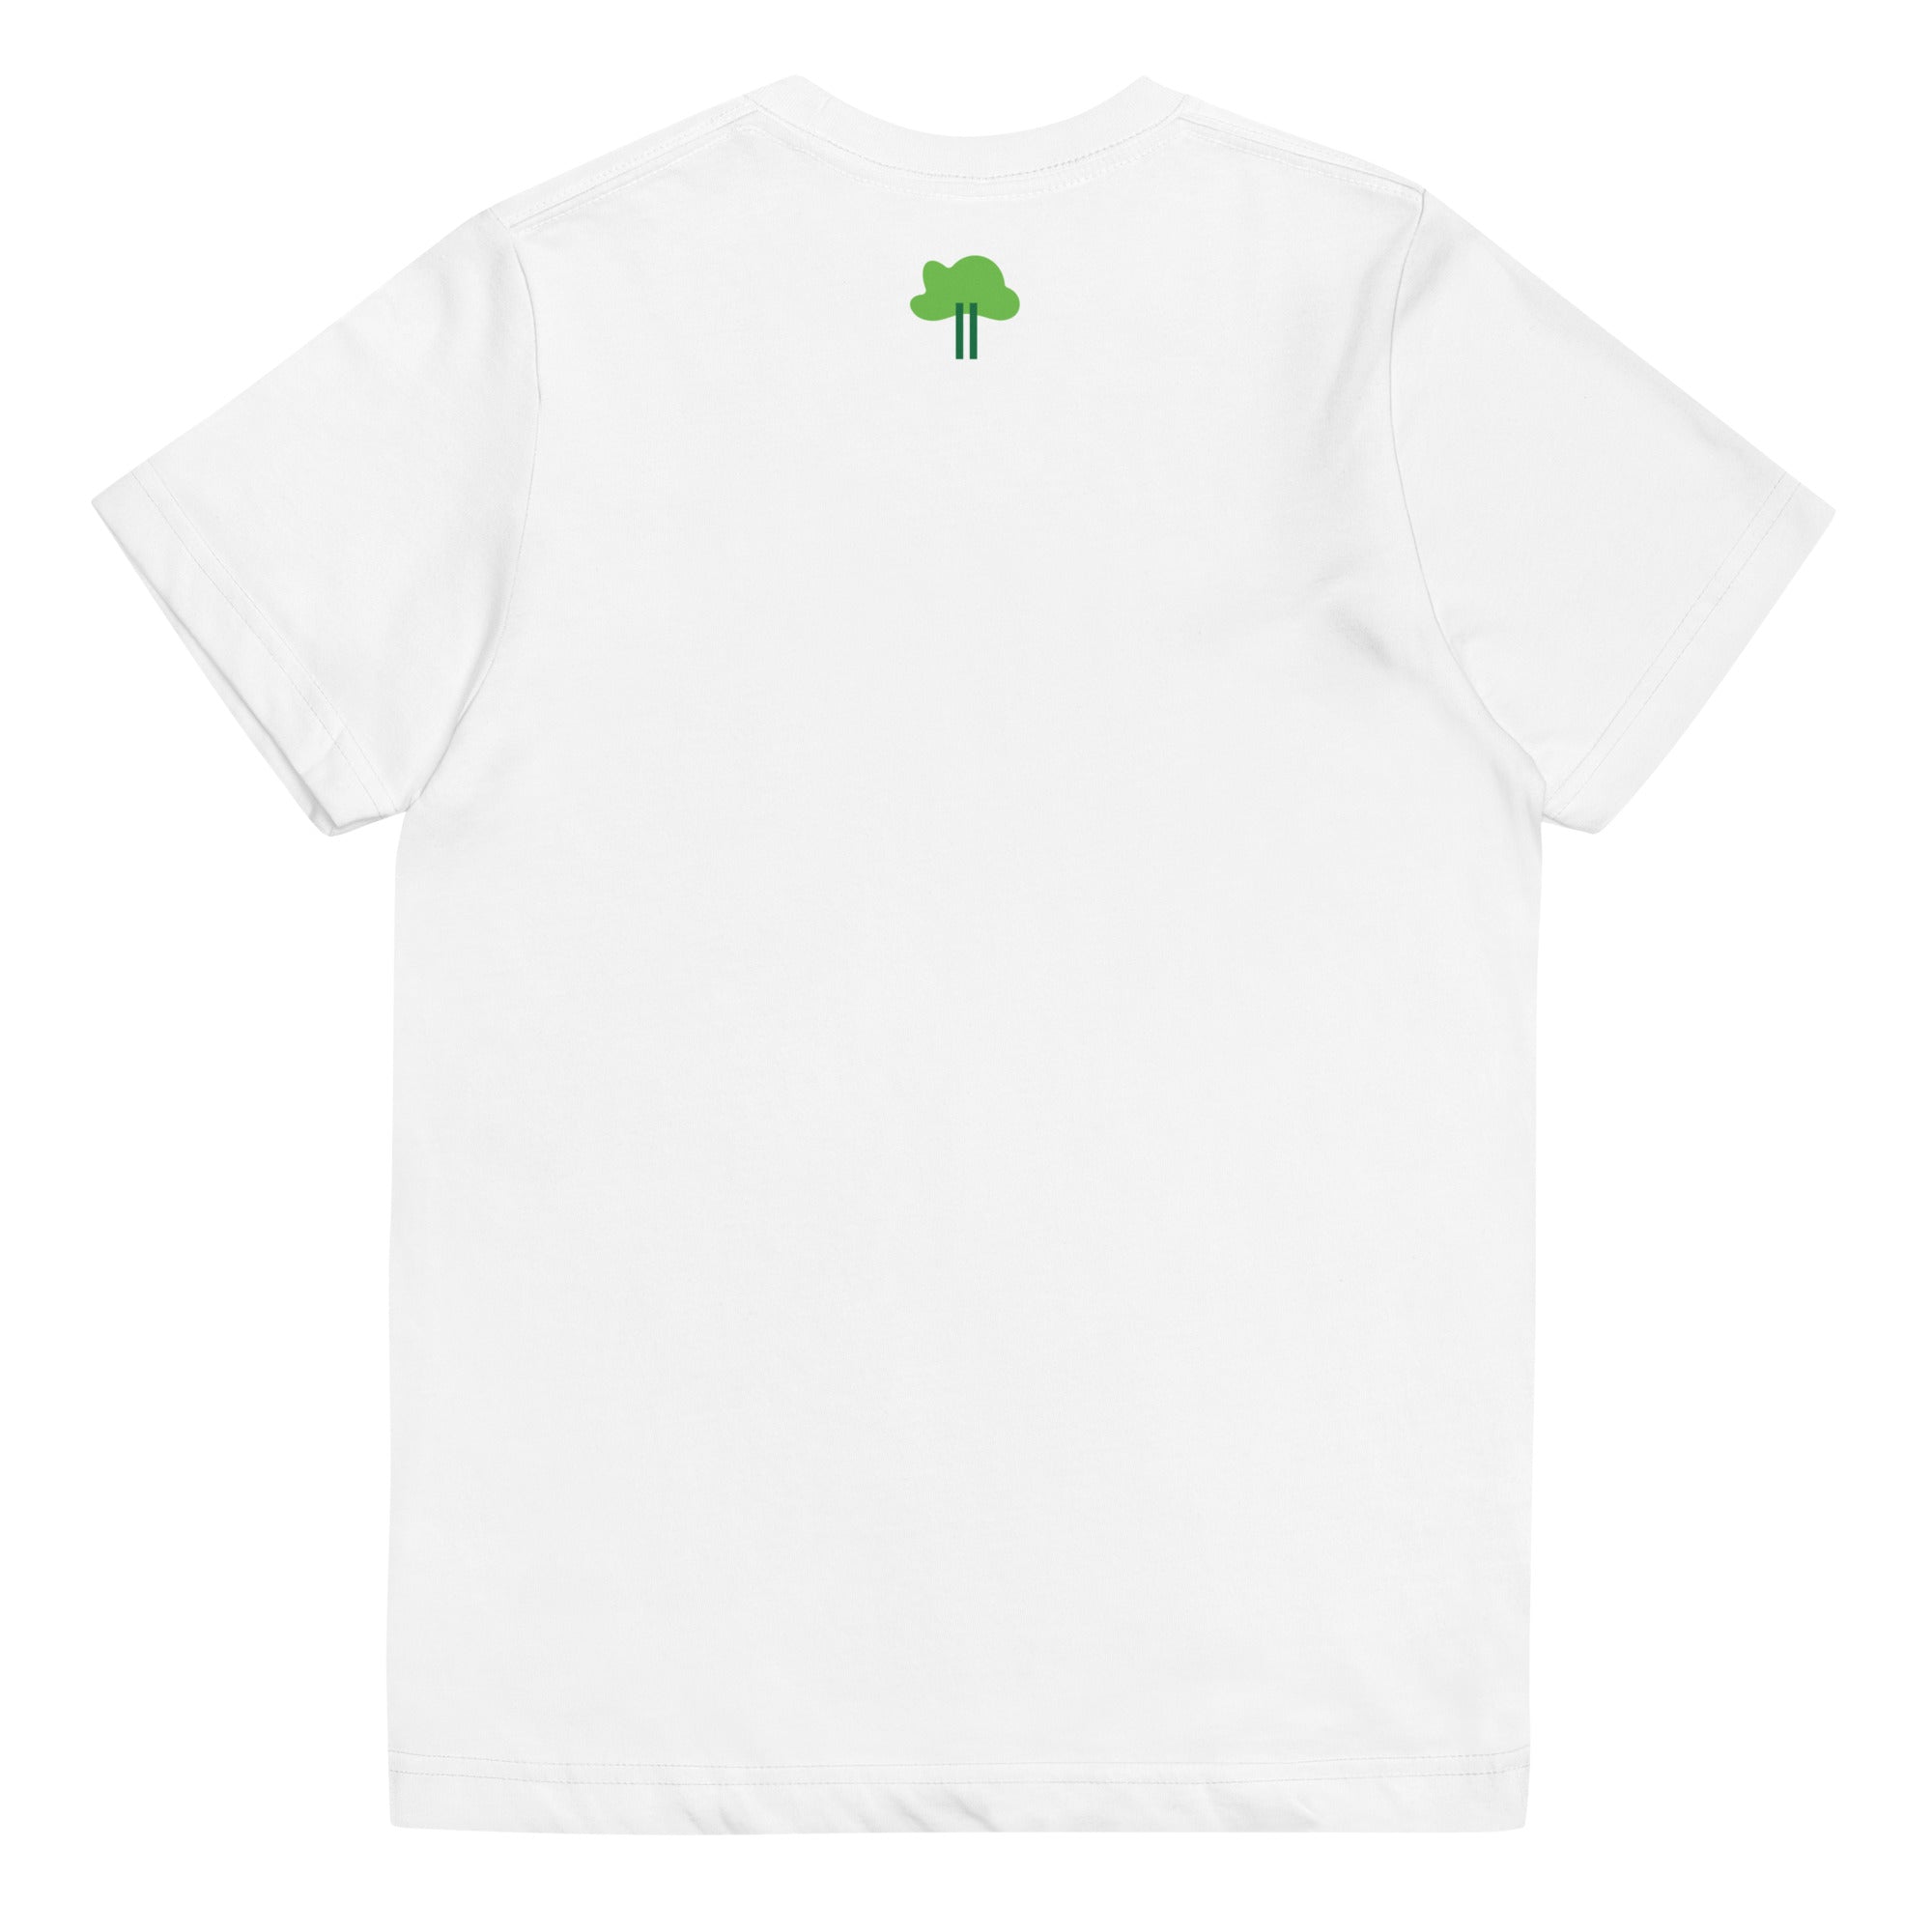 II Temp - Sabana - K3 | Youth jersey t-shirt